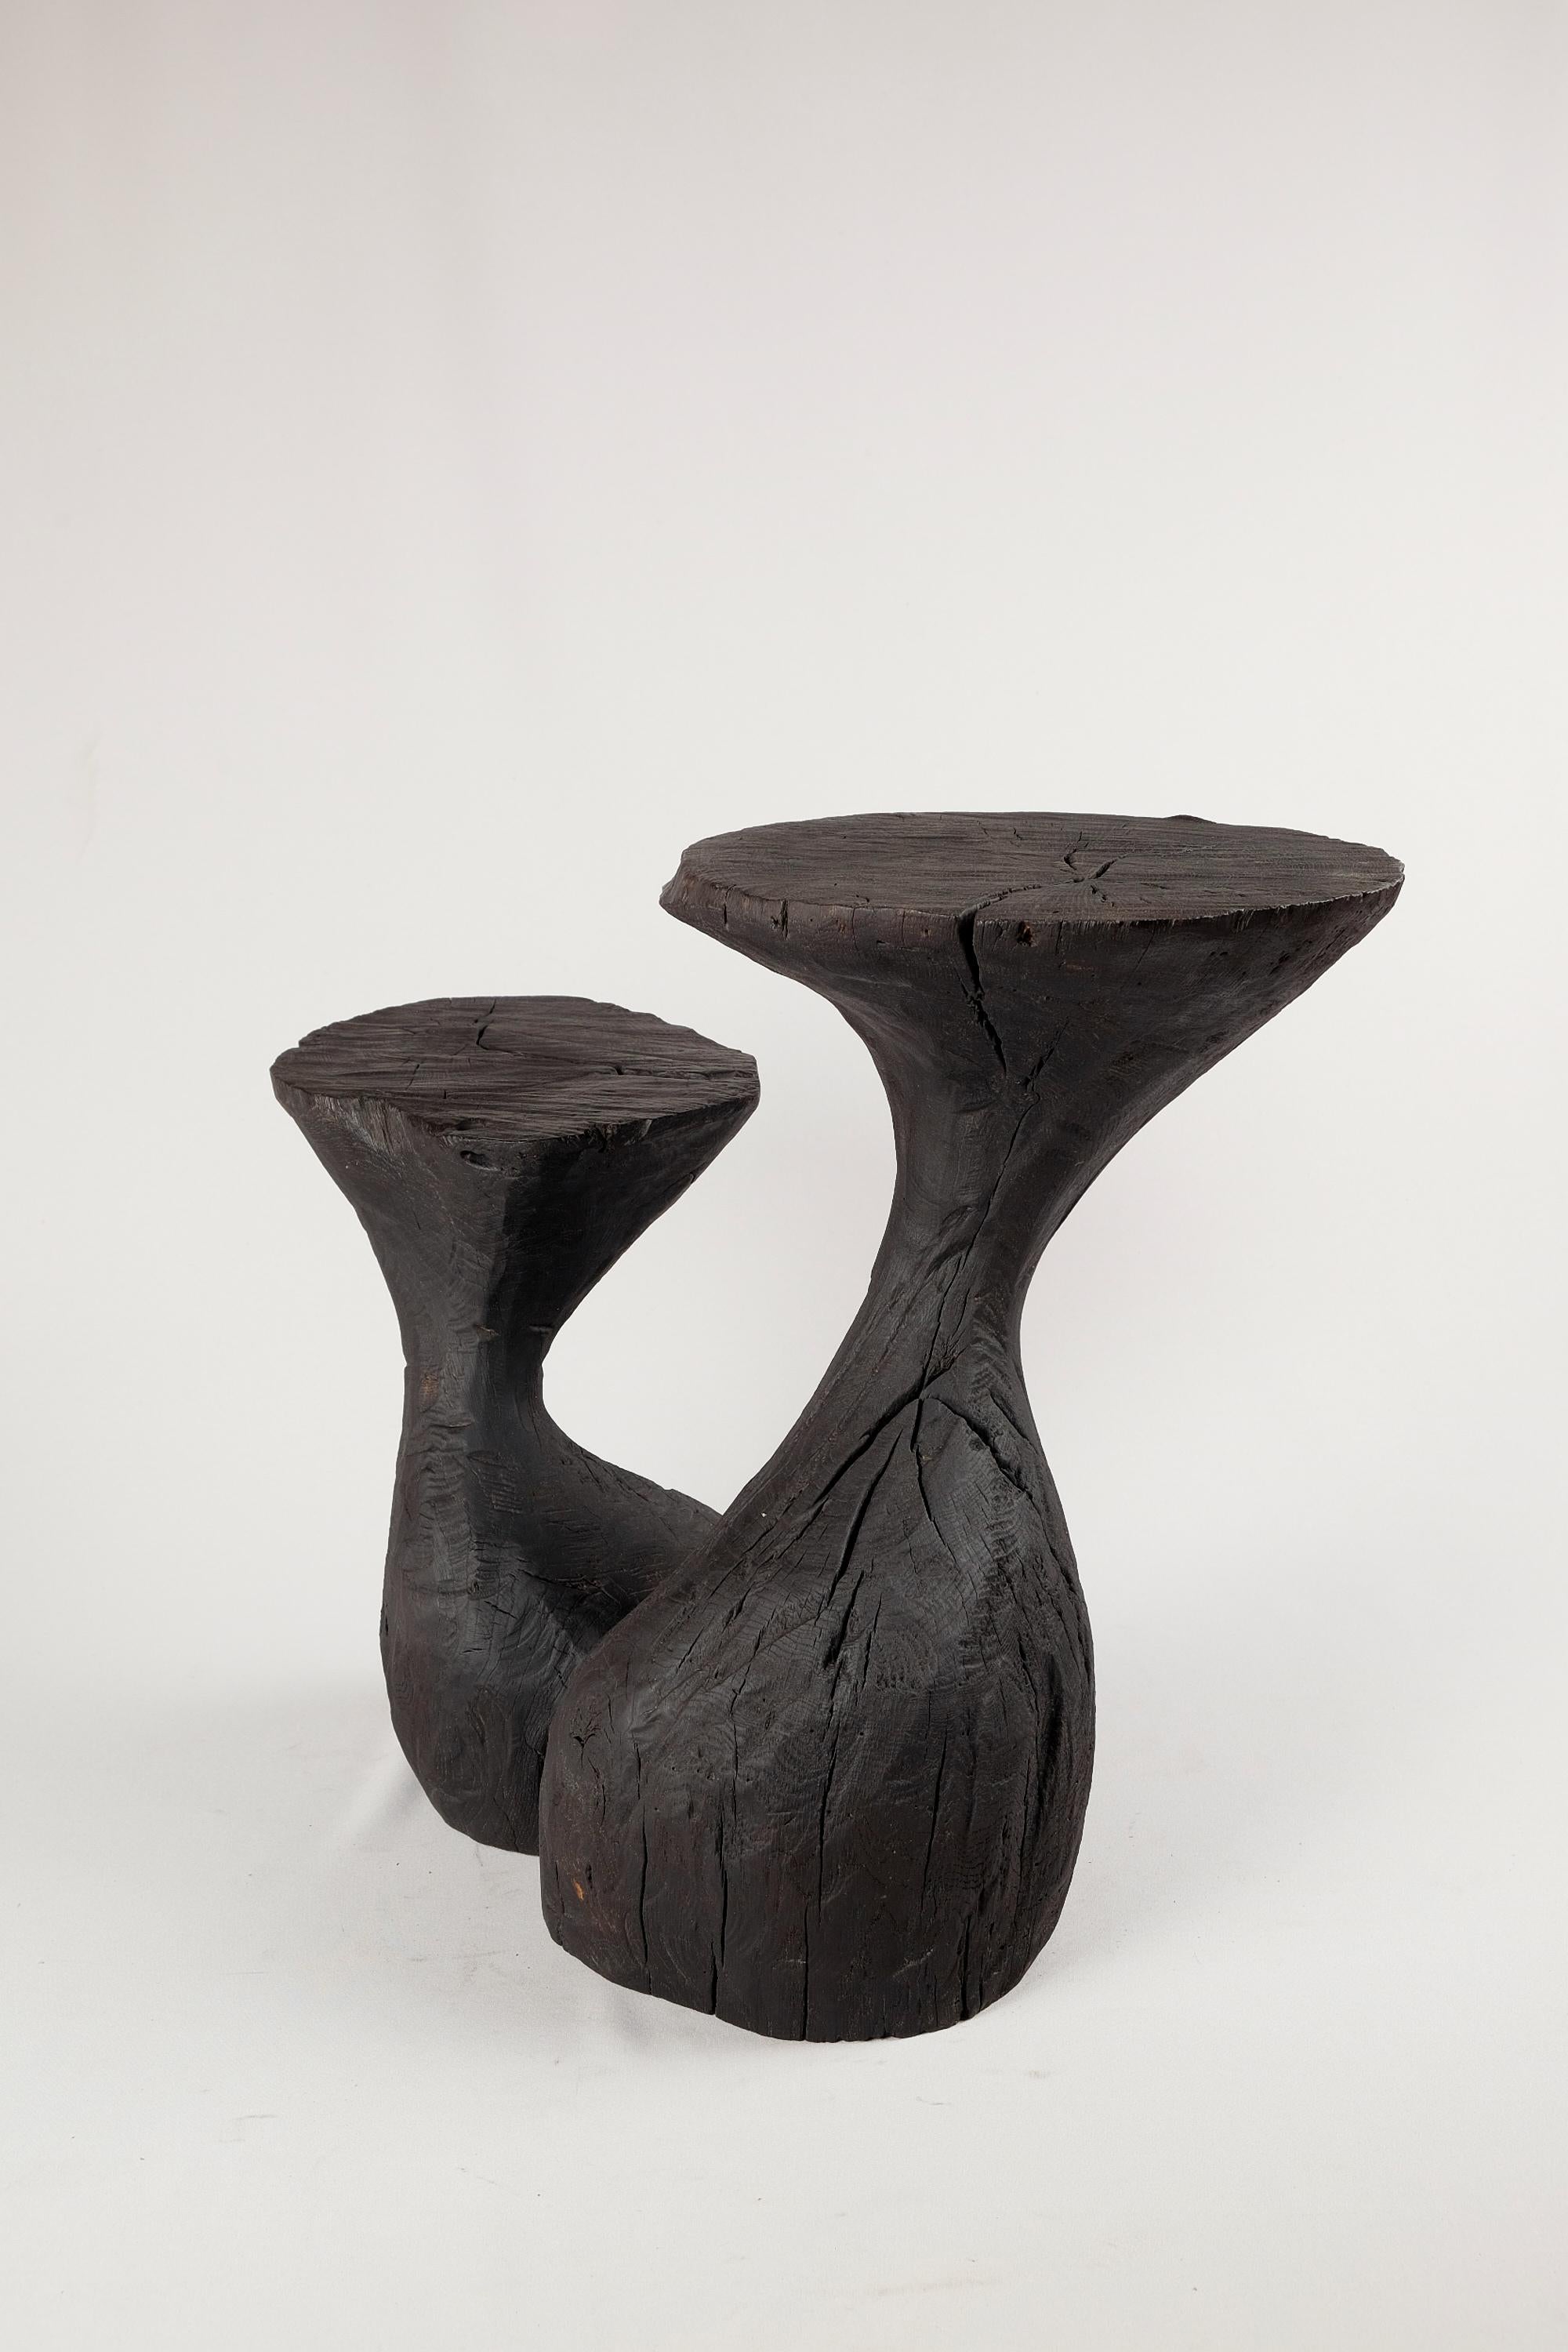 Croatian Solid Burnt Wood, Sculptural Side Table, Original Contemporary Design, Logniture For Sale